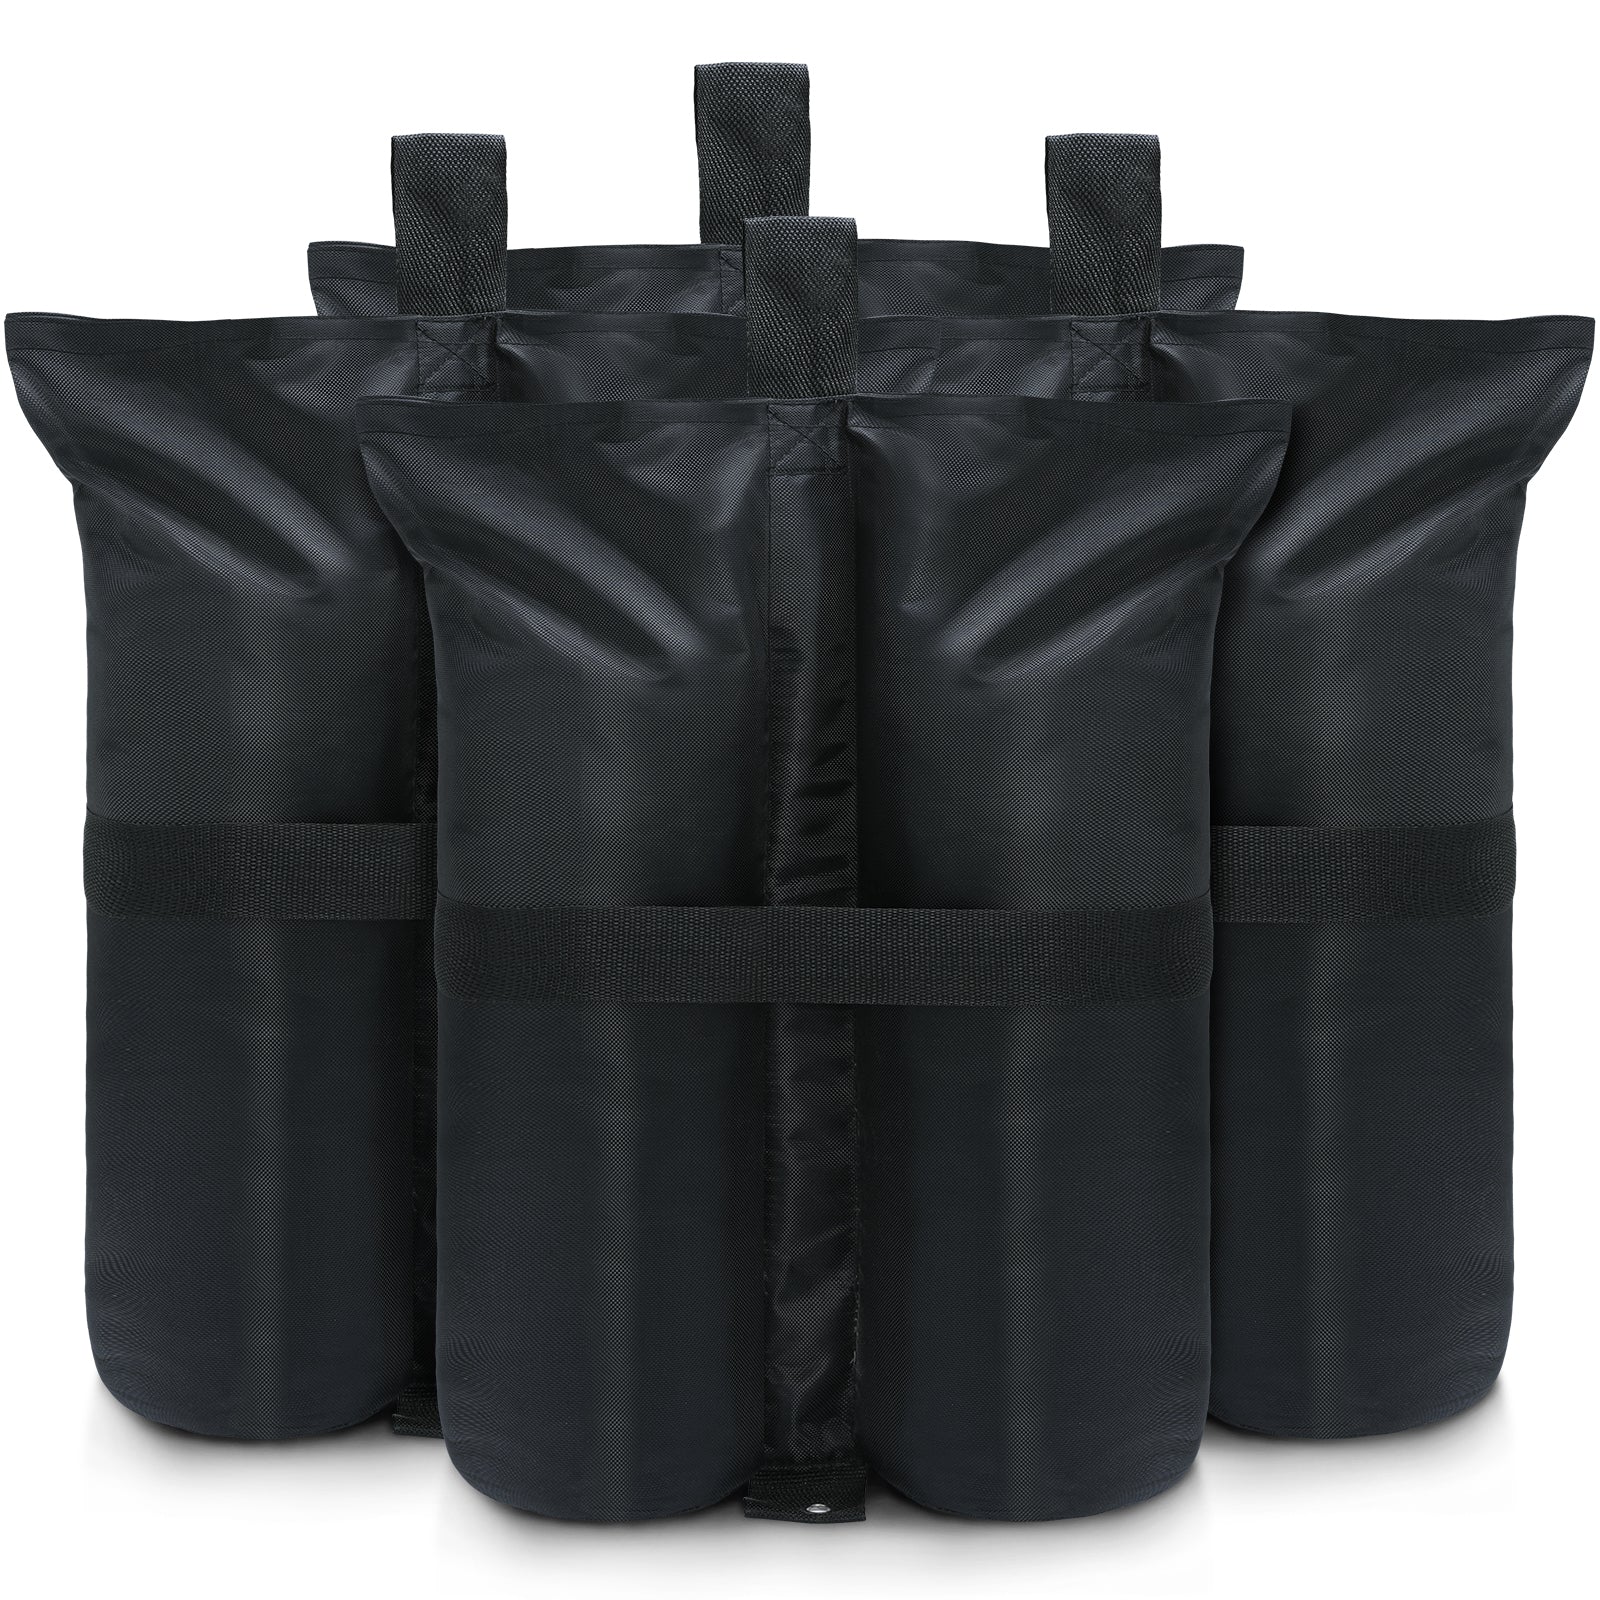 ABCCANOPY Heavy Duty Weight Bags, 185lb